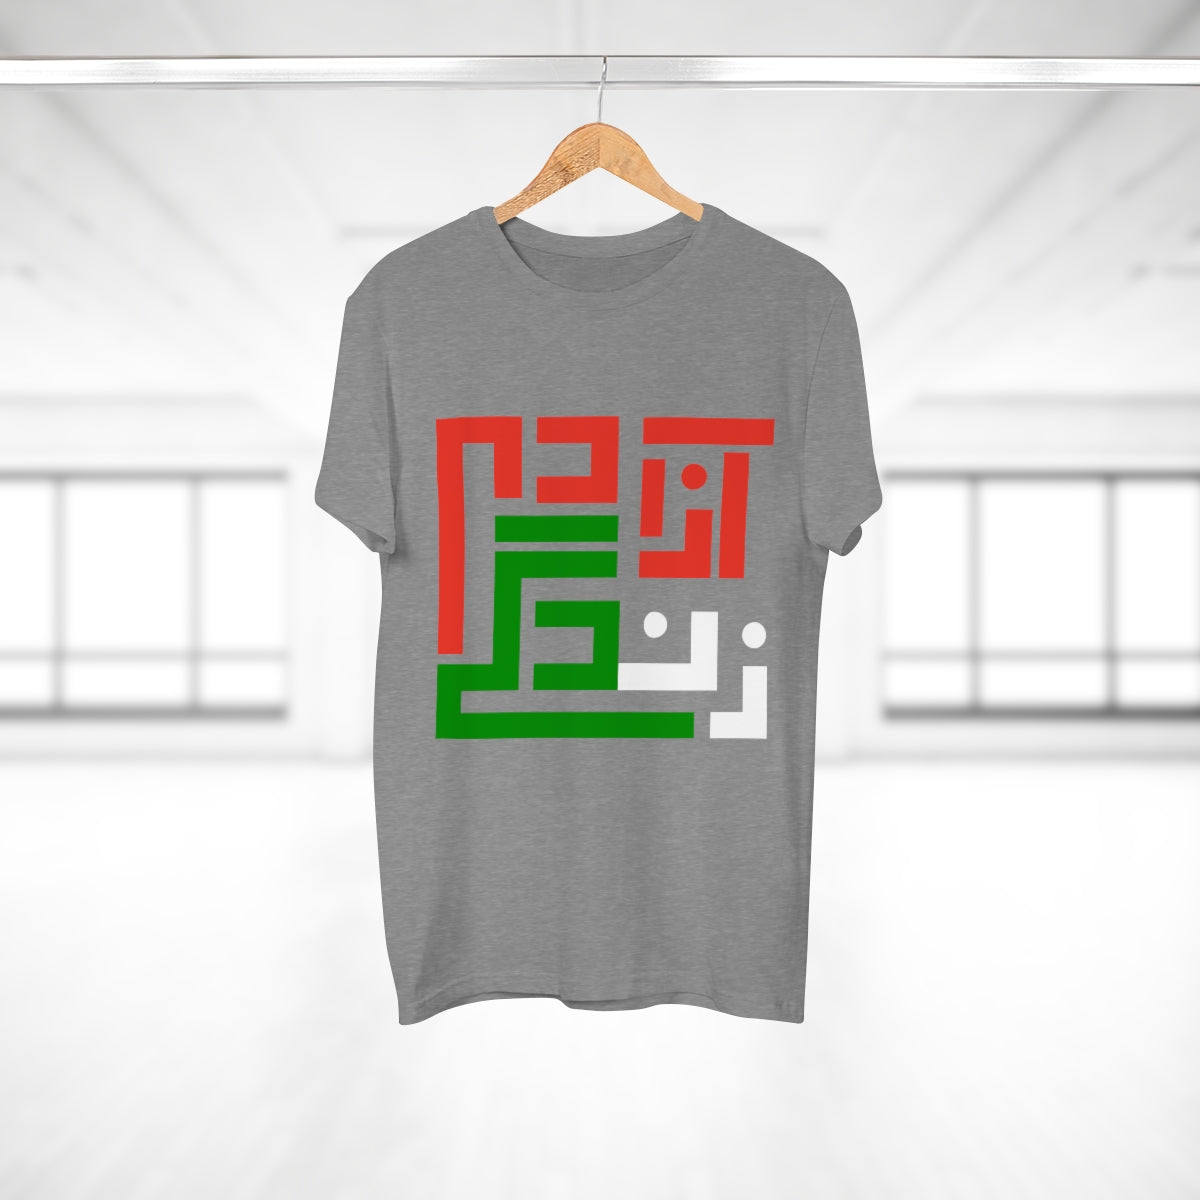 Zan Zendegi Azadi - Men's T-shirt - MAHSAAMINI - Iran Freedom